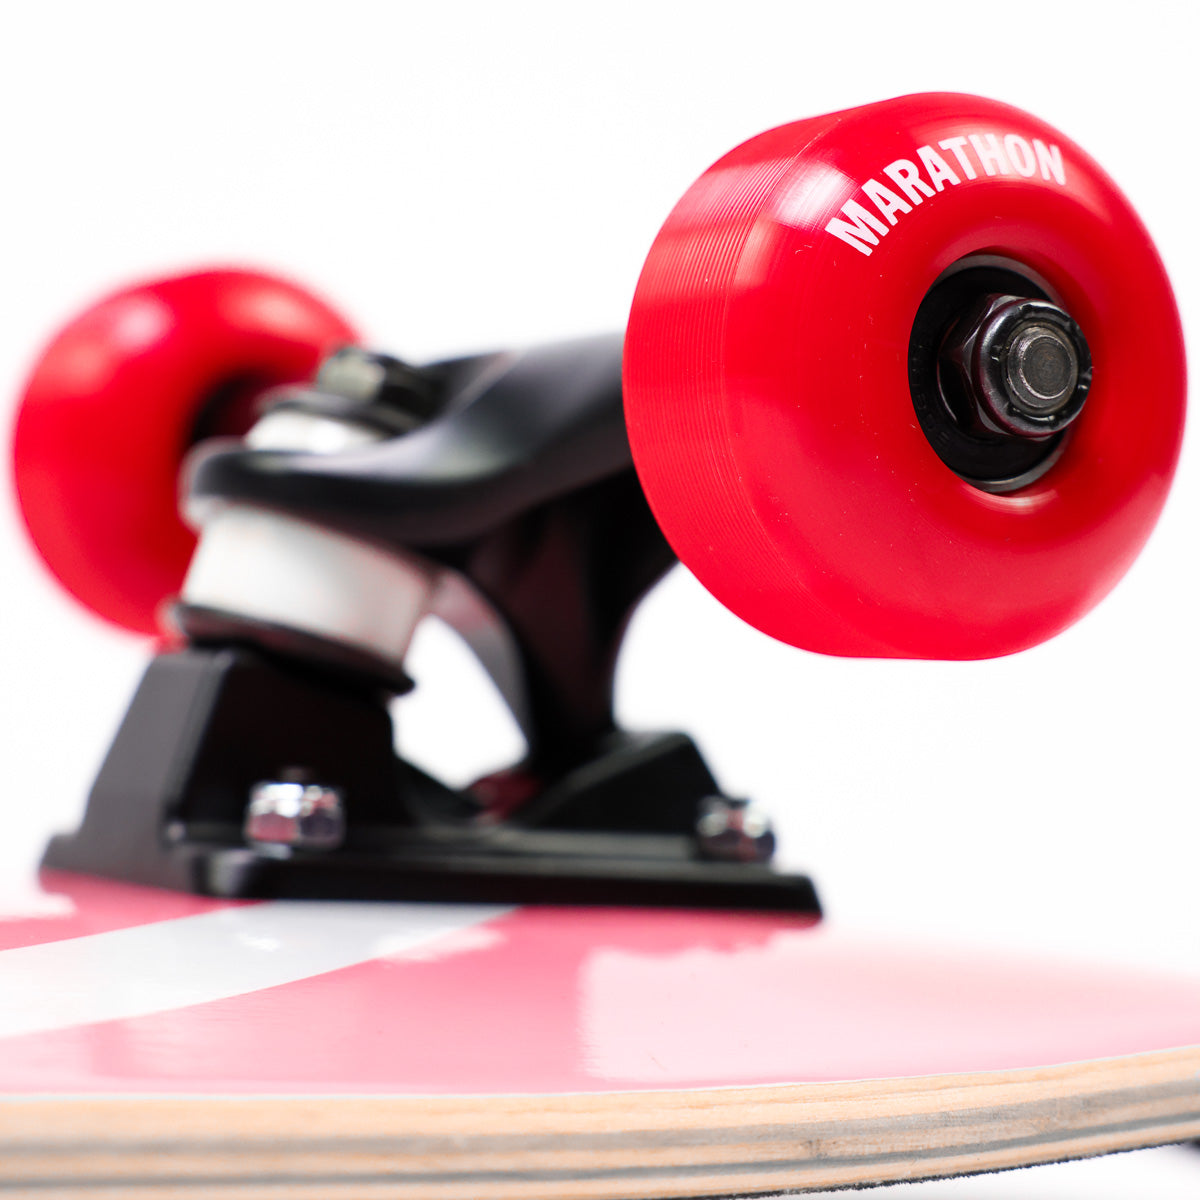 Limited Edition Crenshaw Skateboard - Light Pink/White - Wheel Detail